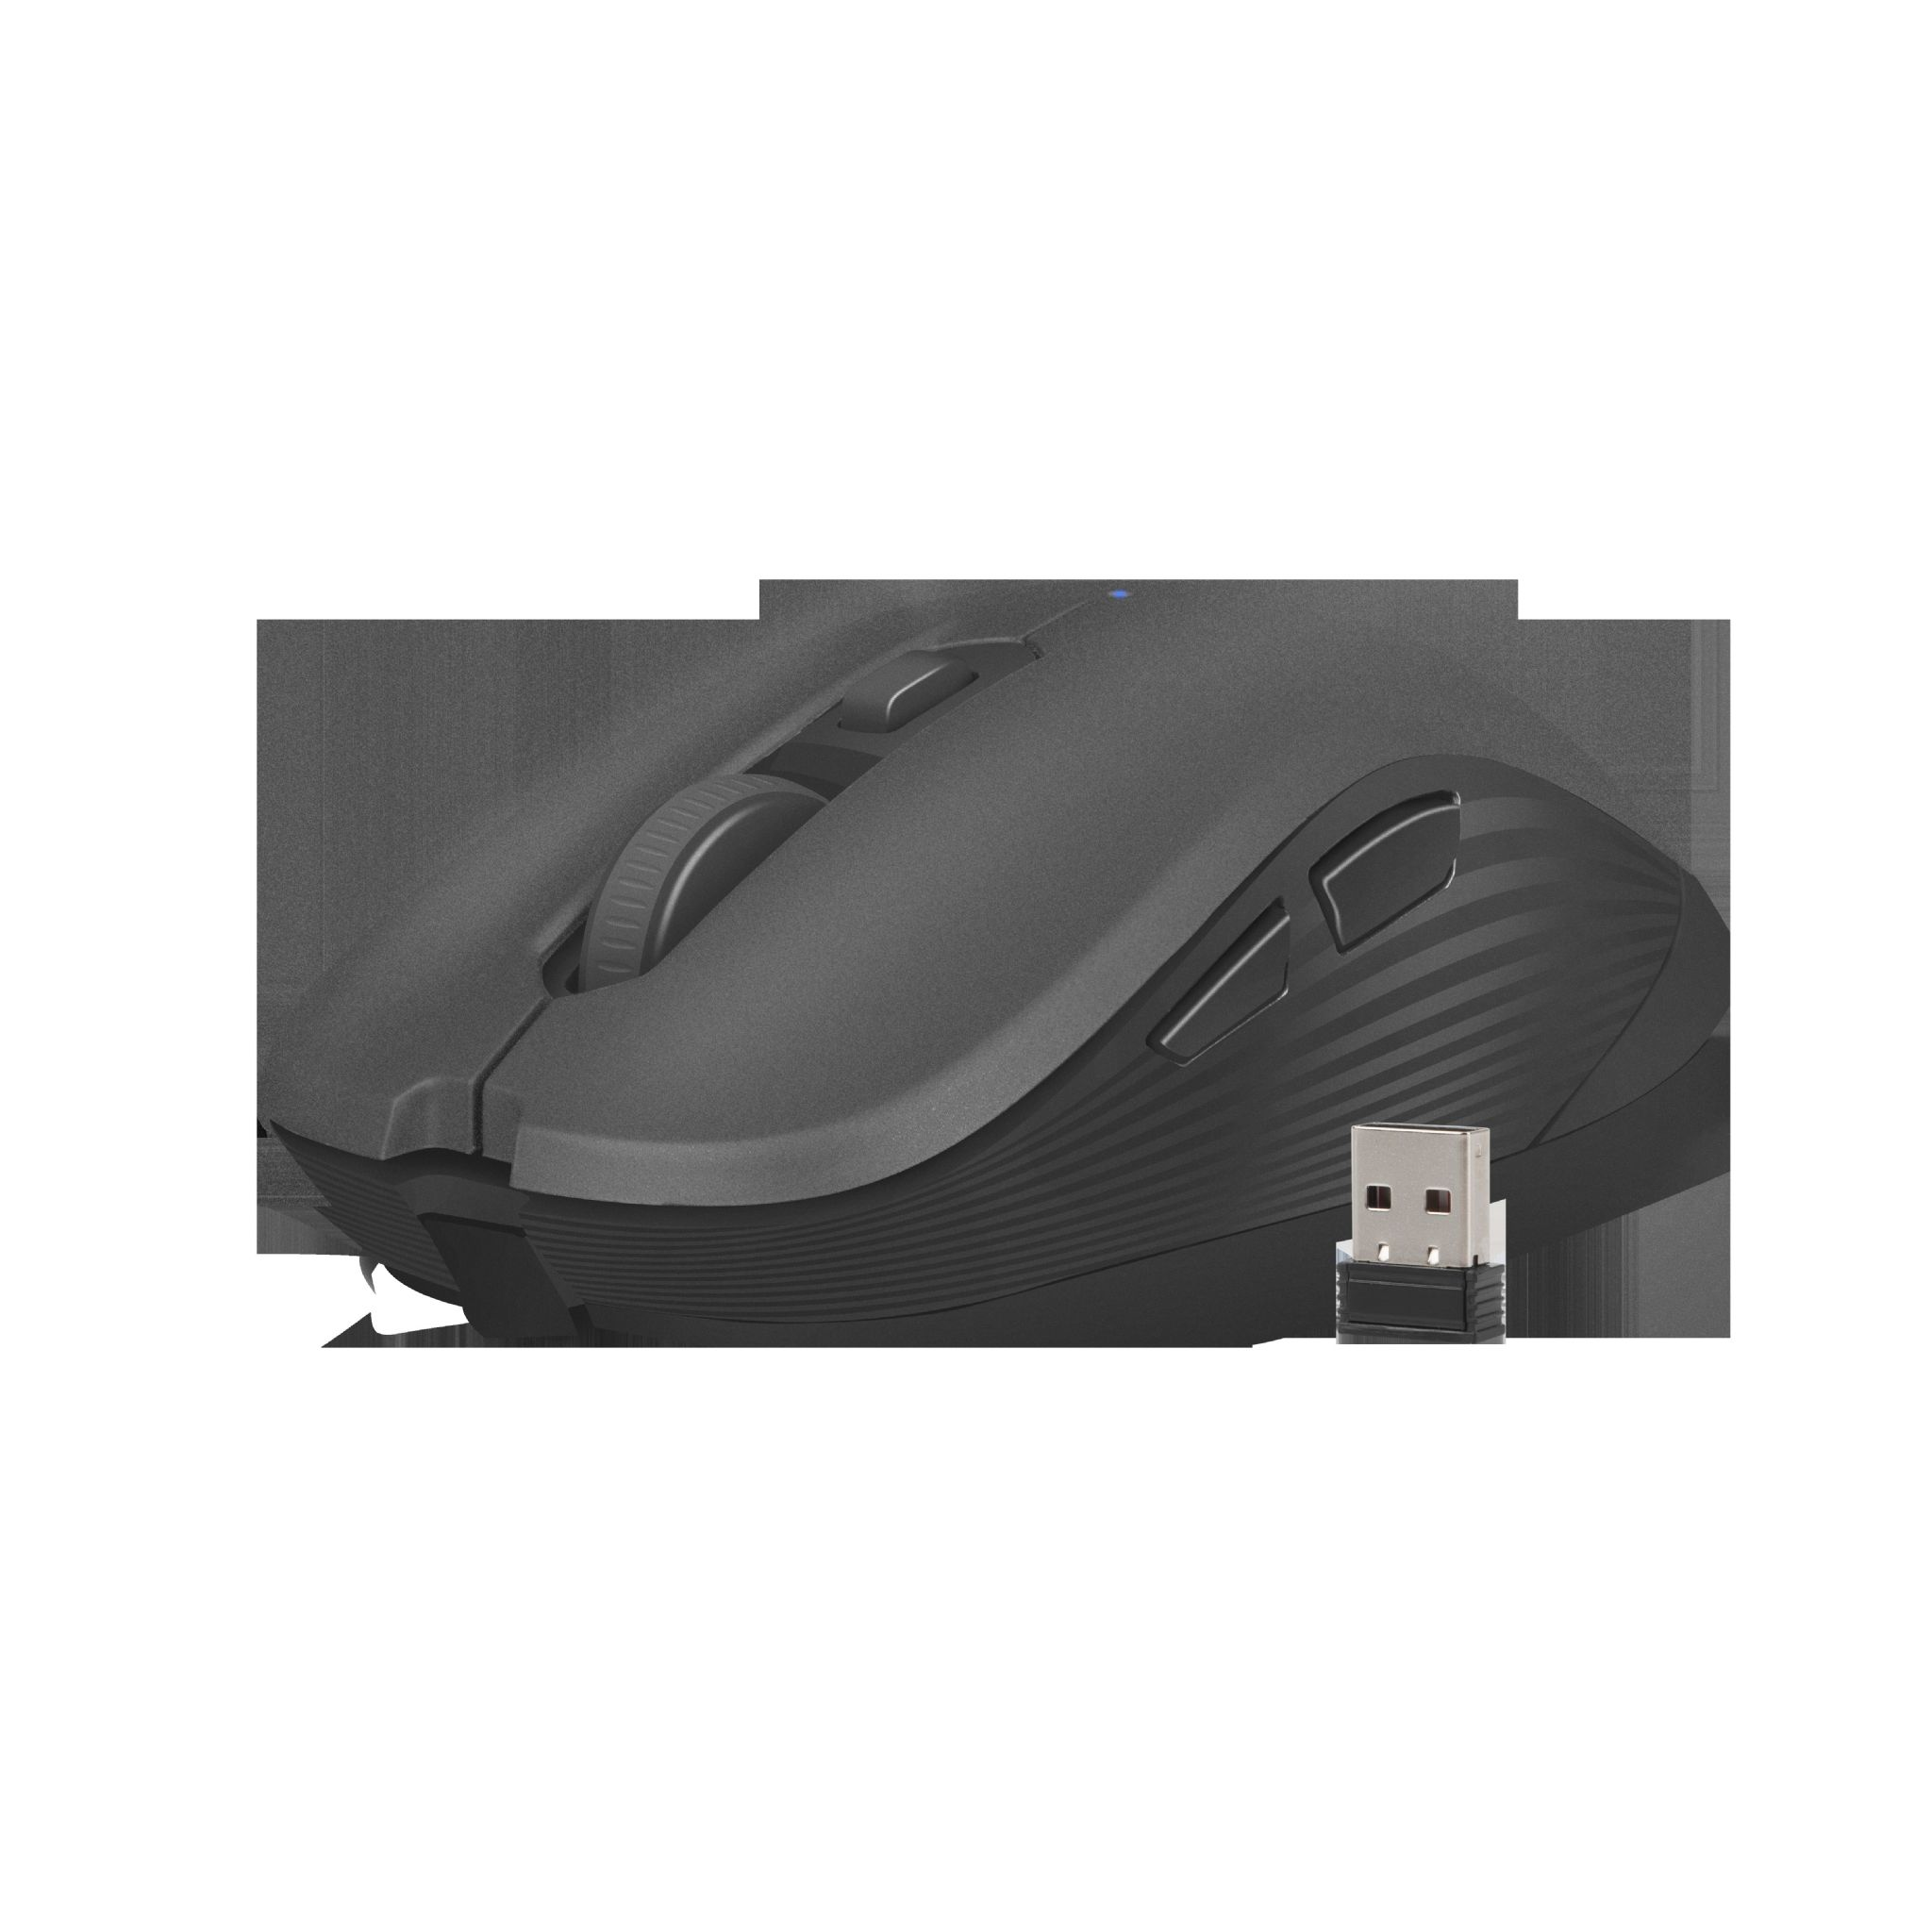 DPI 1600 Desktop-Set, Robin NATEC Maus Black Kabellose